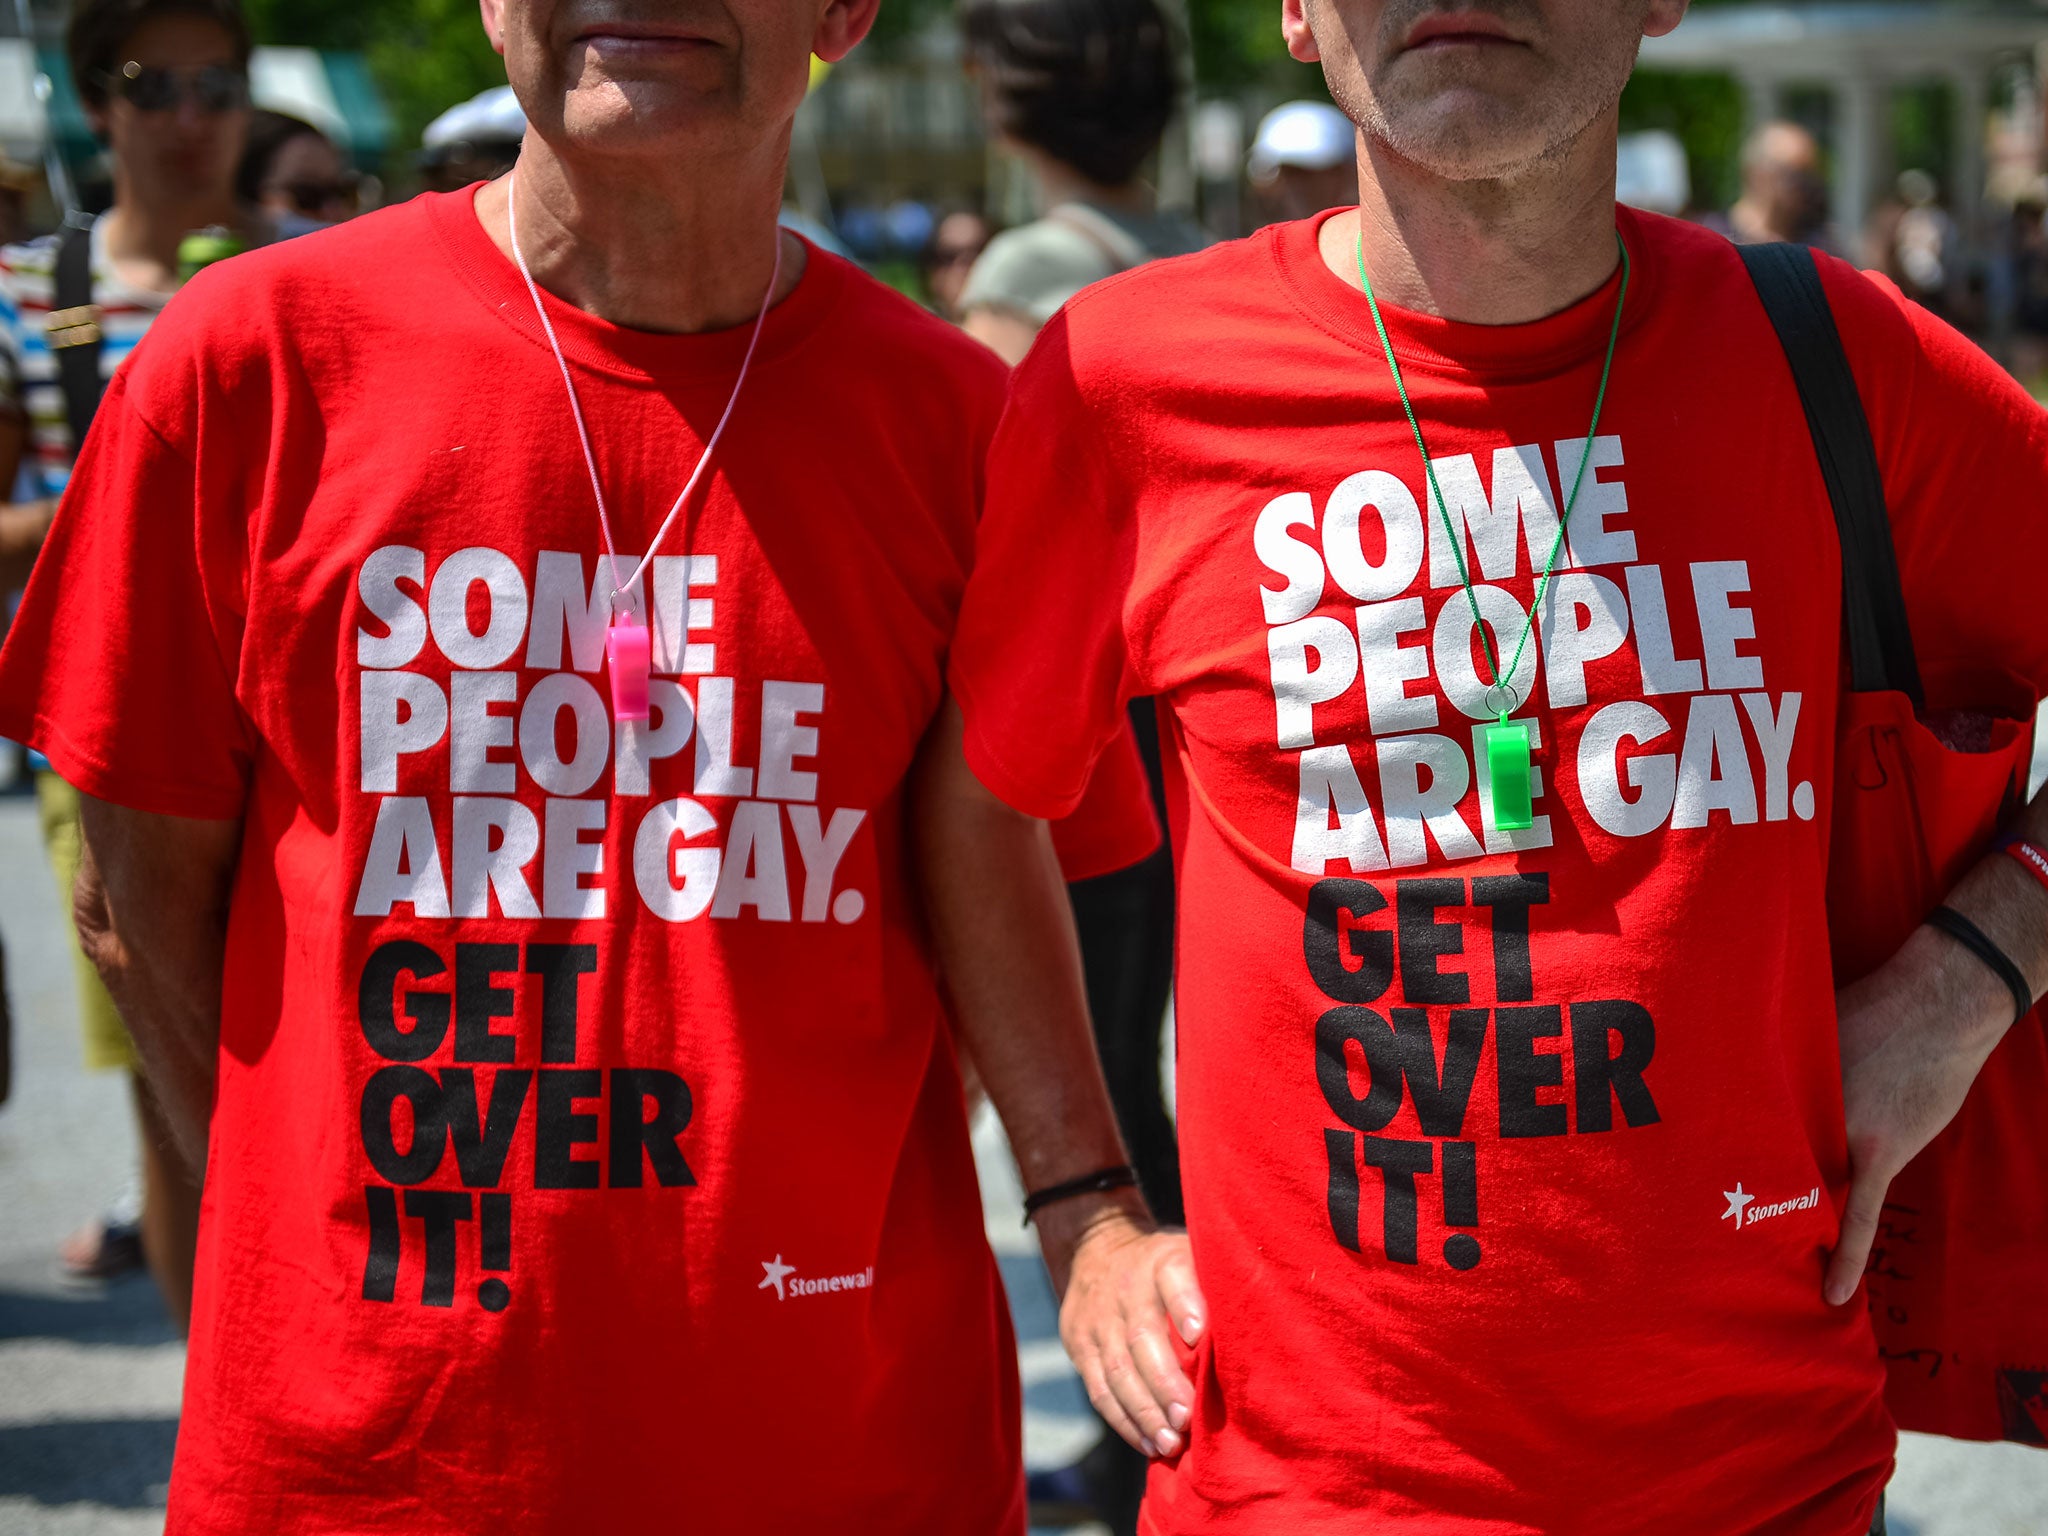 belfast gay pride t shirts